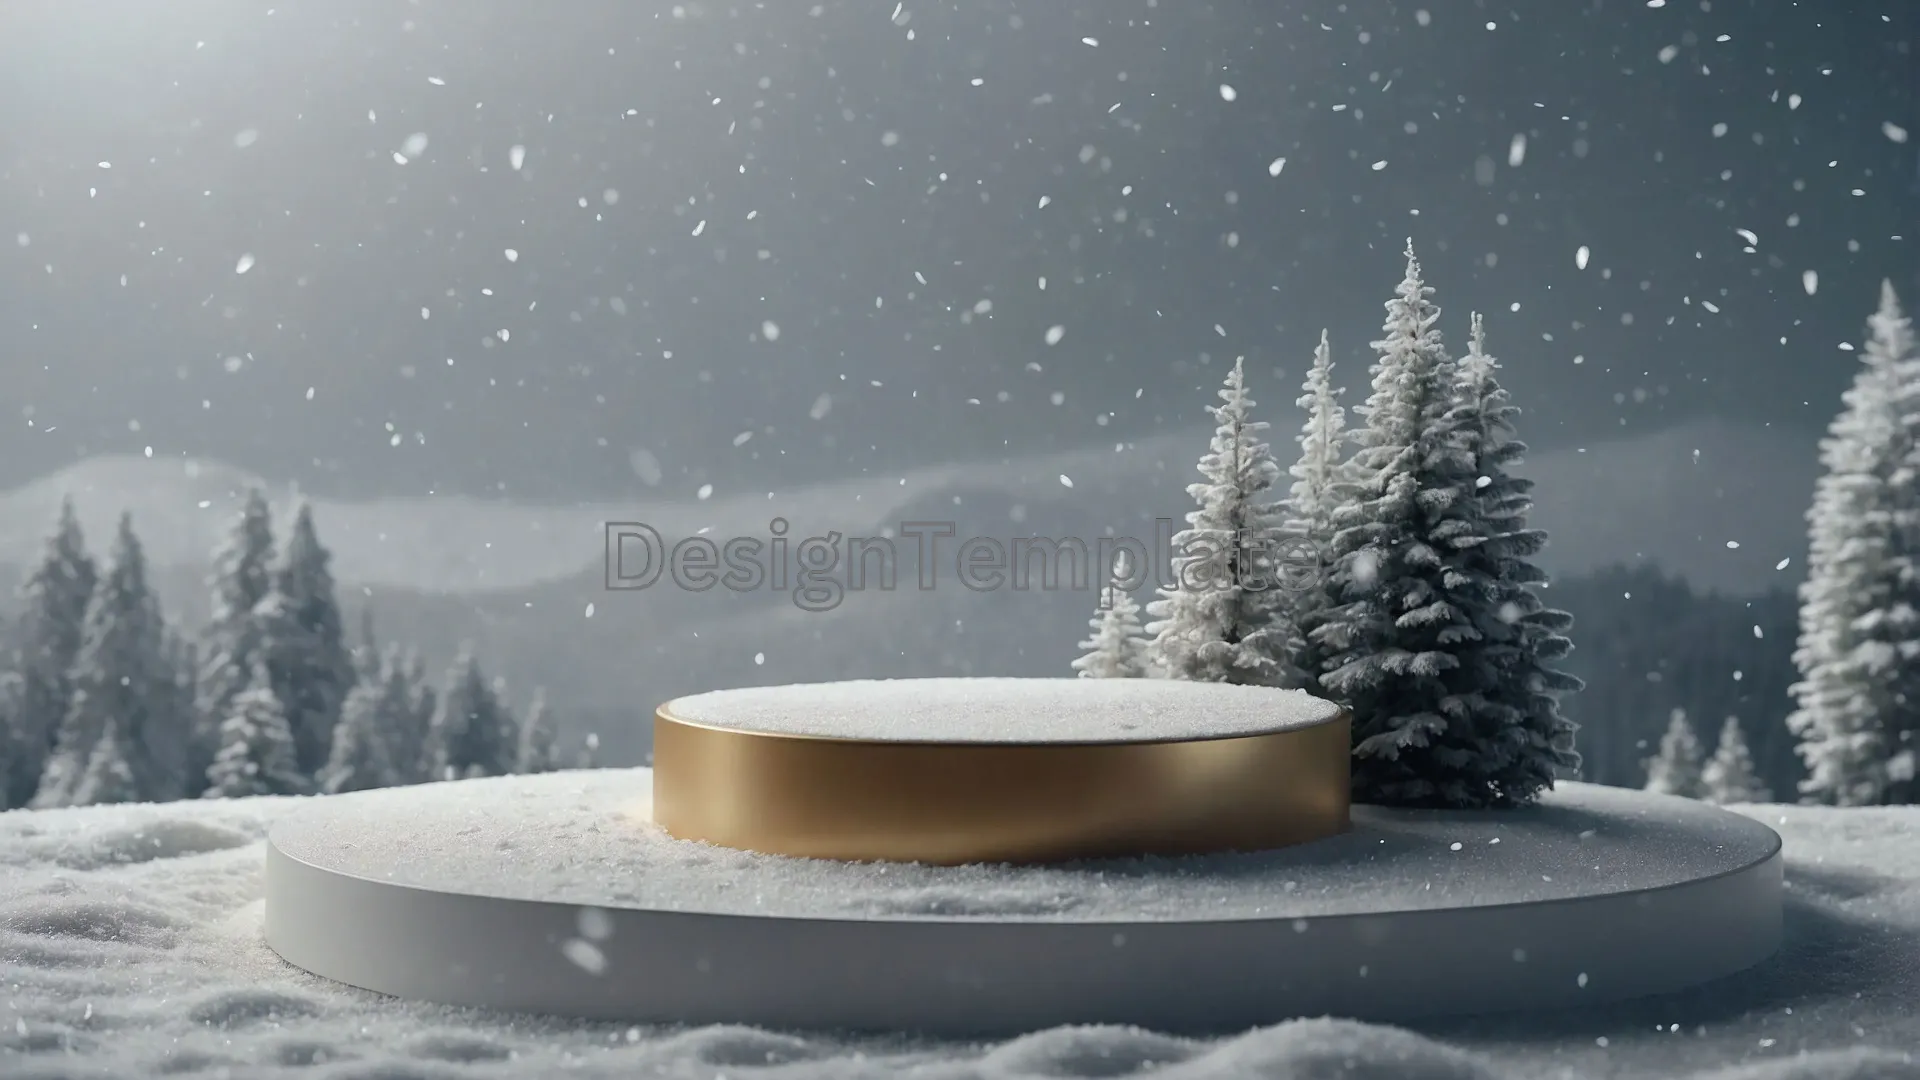 Icy Zen Platform Background Photo Fresh Snow View image